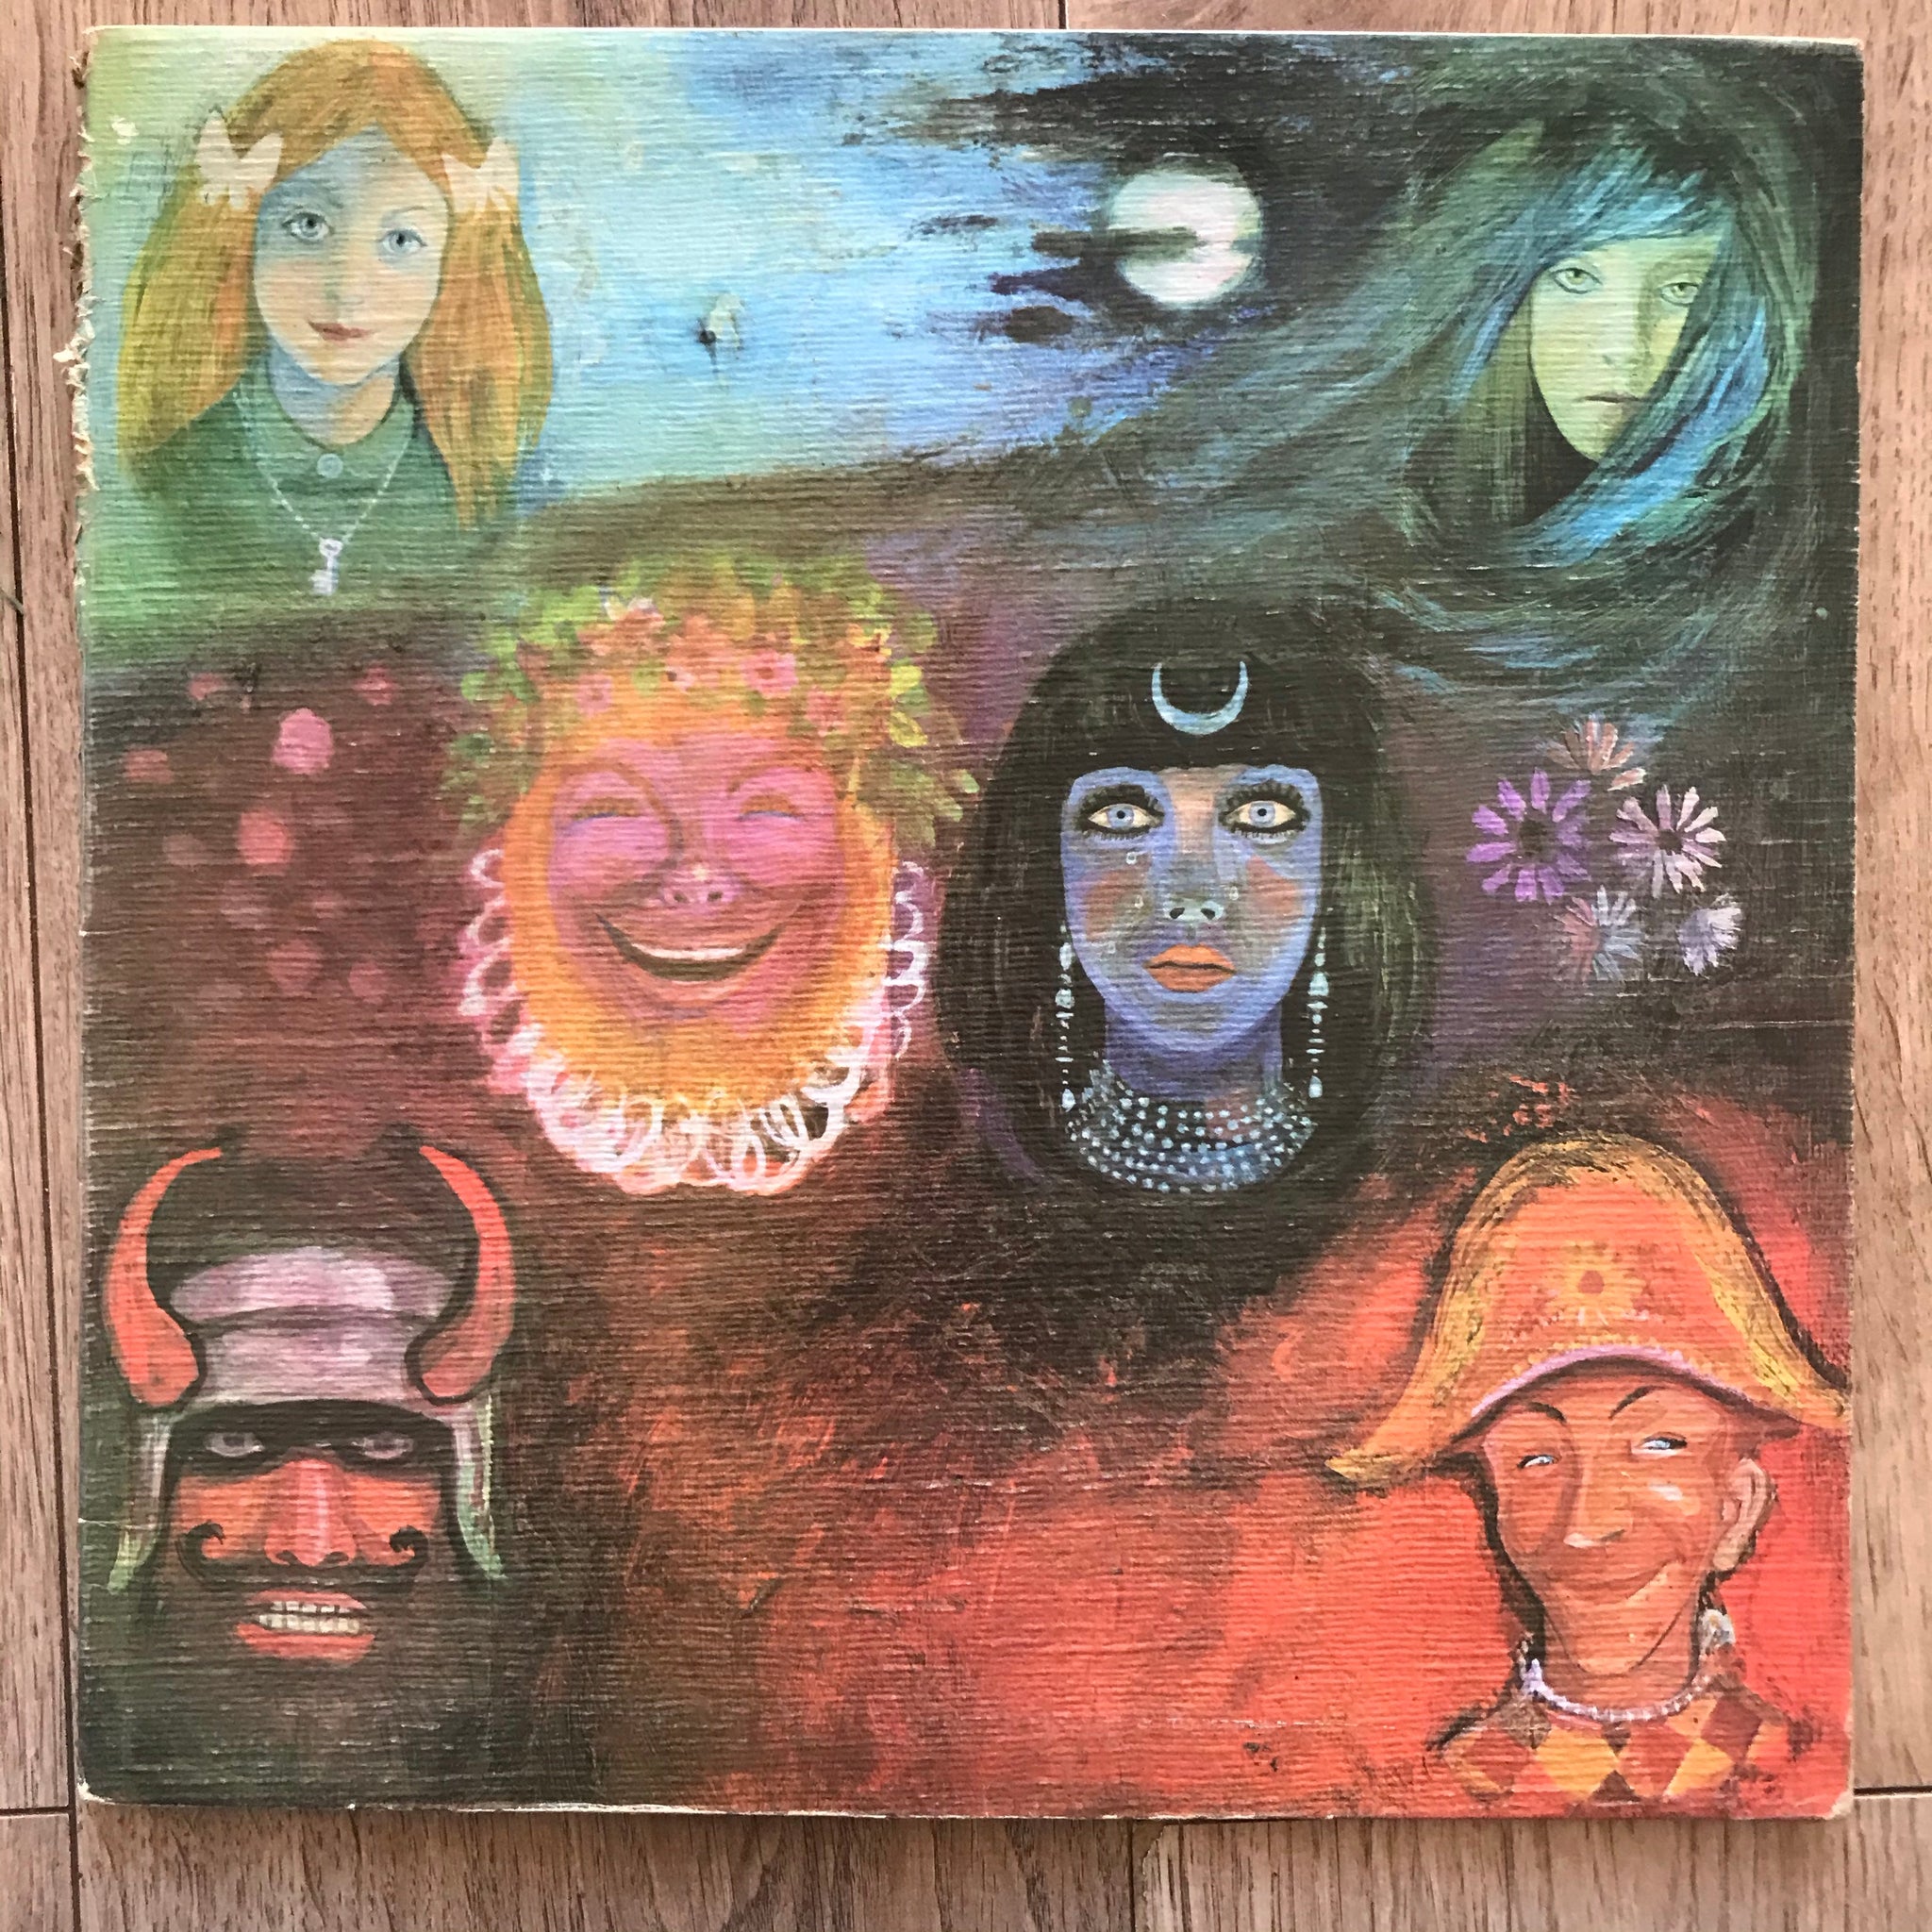 King Crimson LP “In The Wake Of The Poseidon” UK 1st Press A 1 B 1